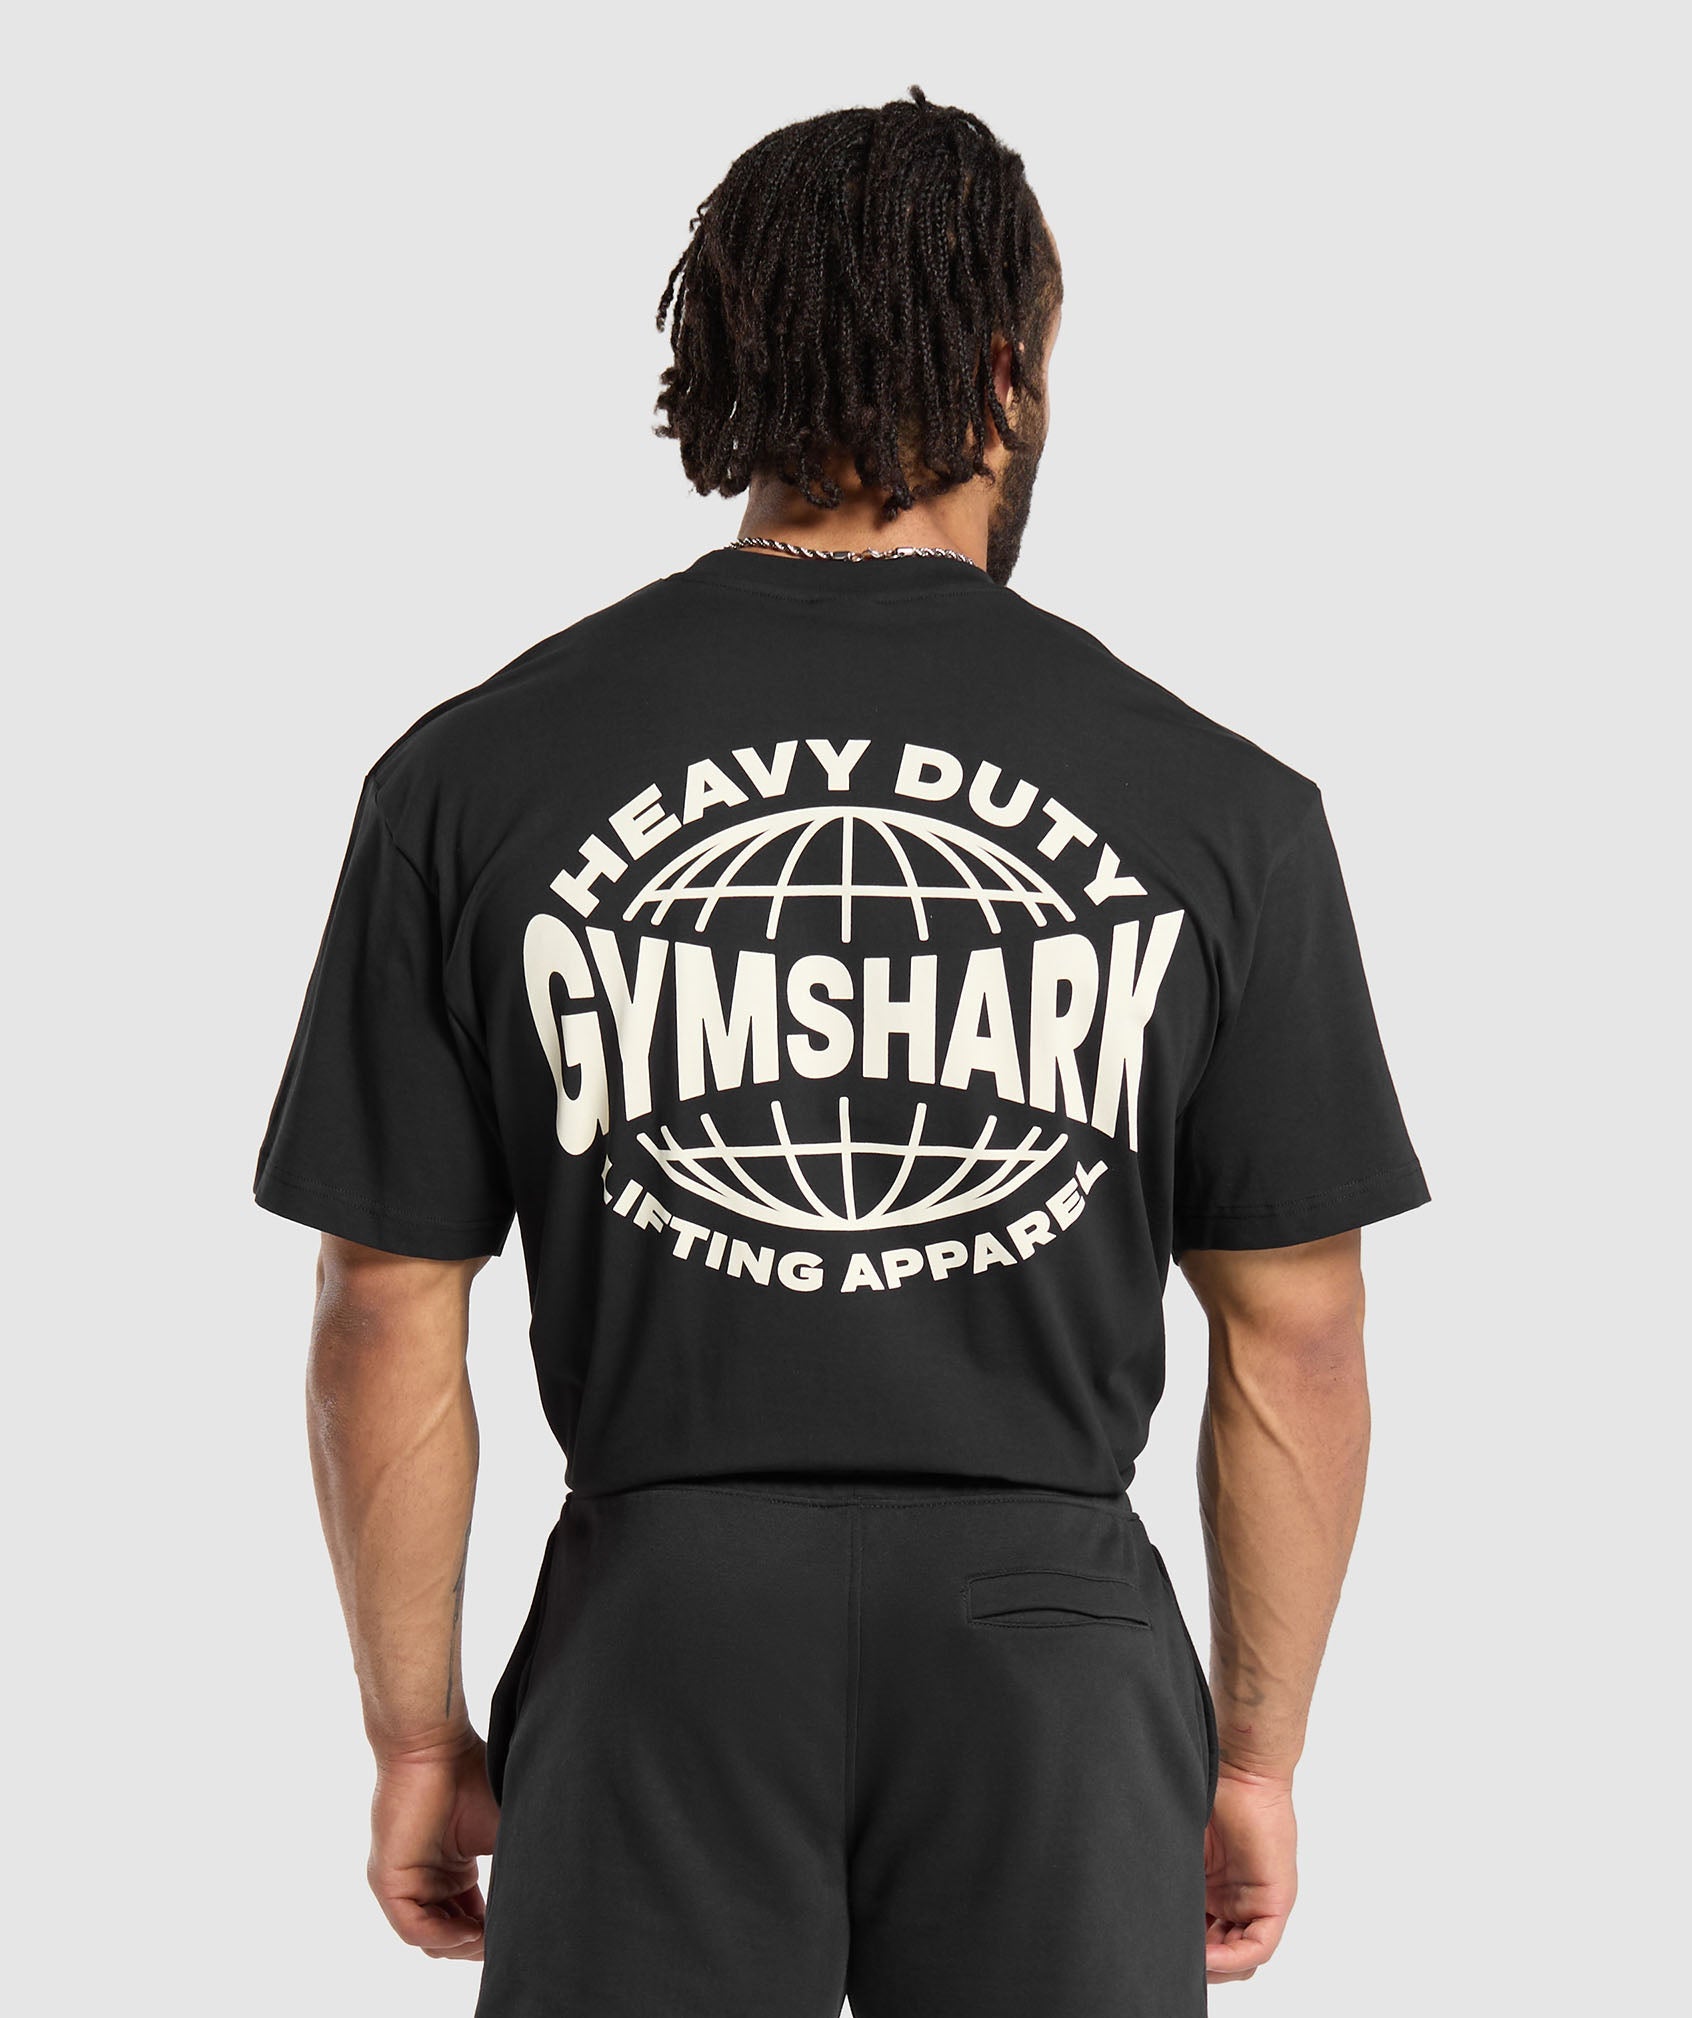 Heavy Duty Apparel T-Shirt in Black - view 1